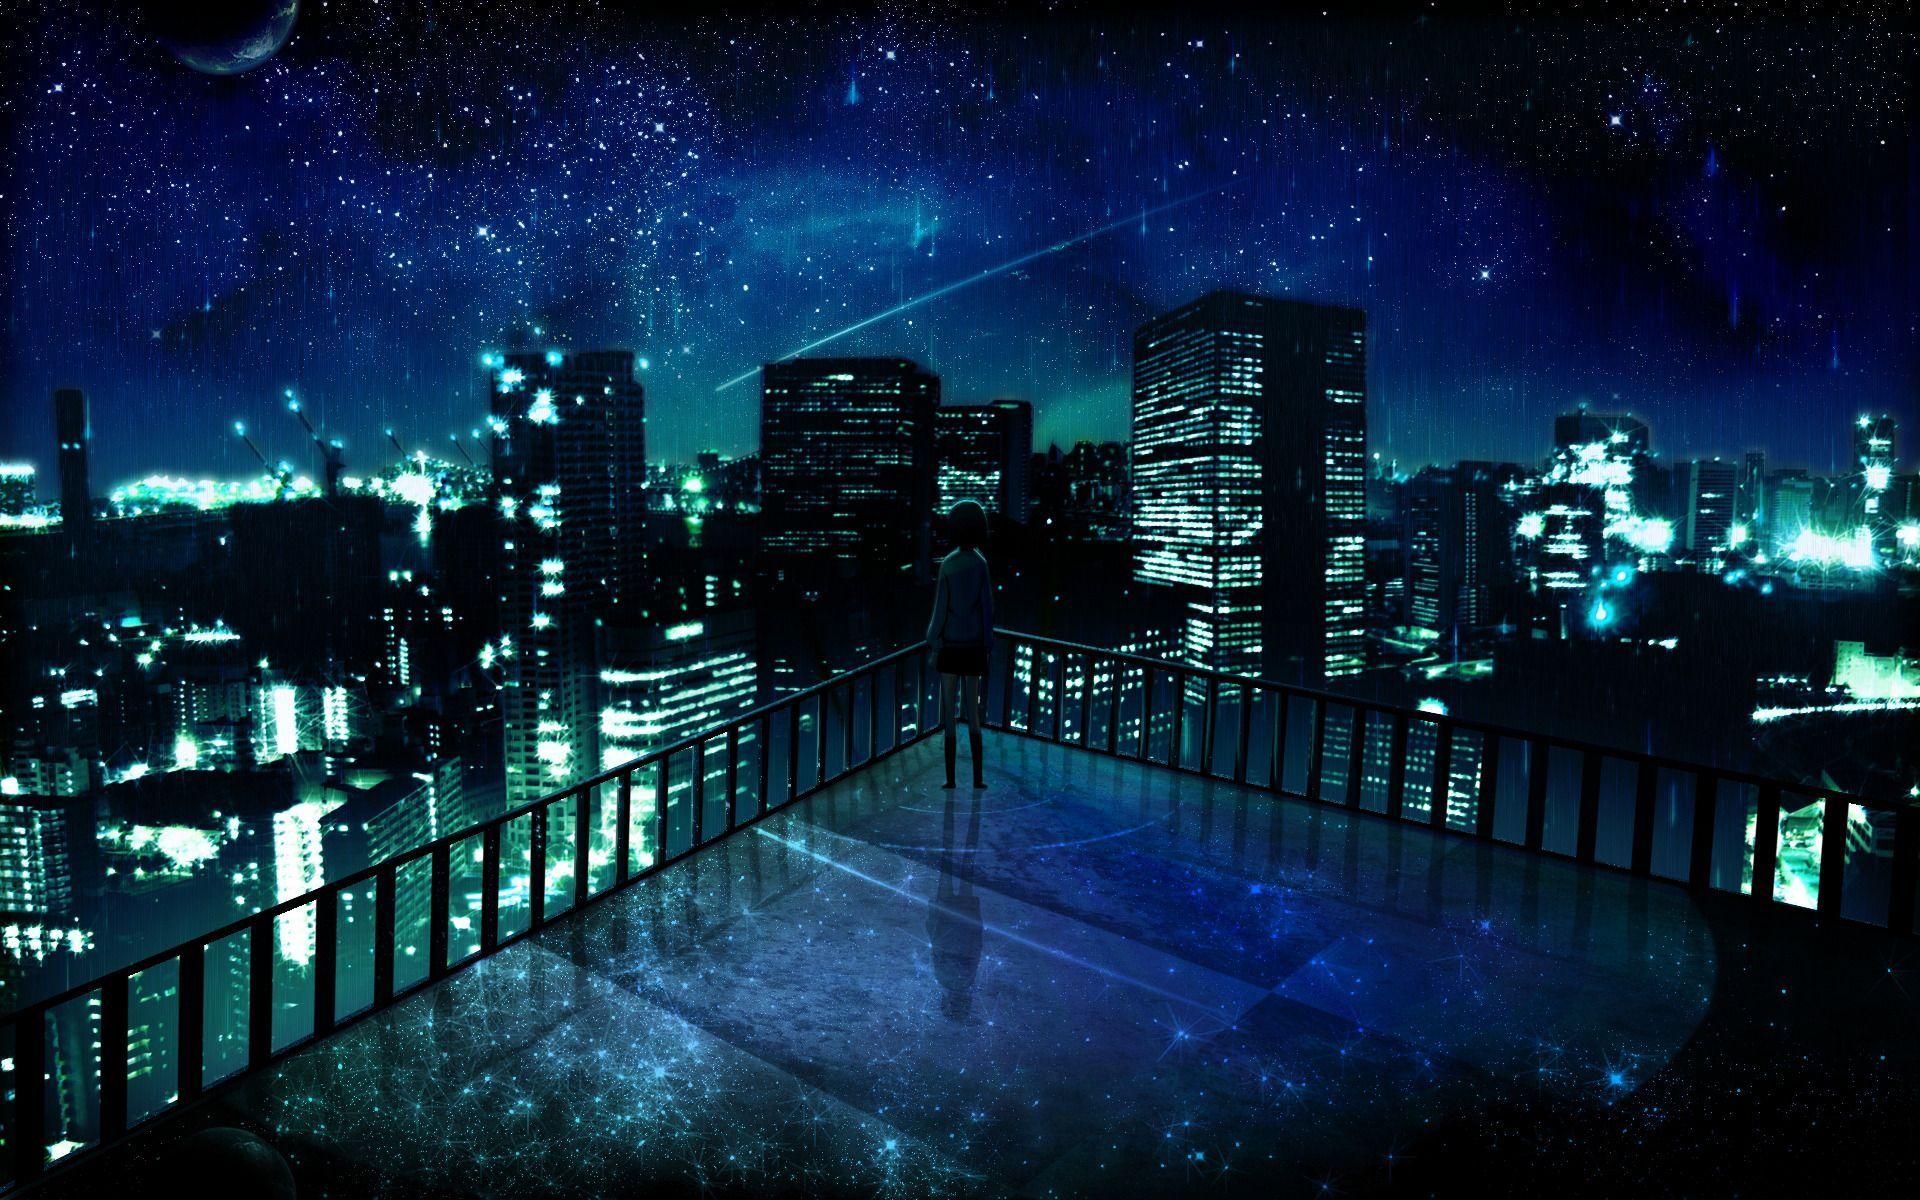 Dark Anime Landscape Wallpapers - Top Free Dark Anime Landscape